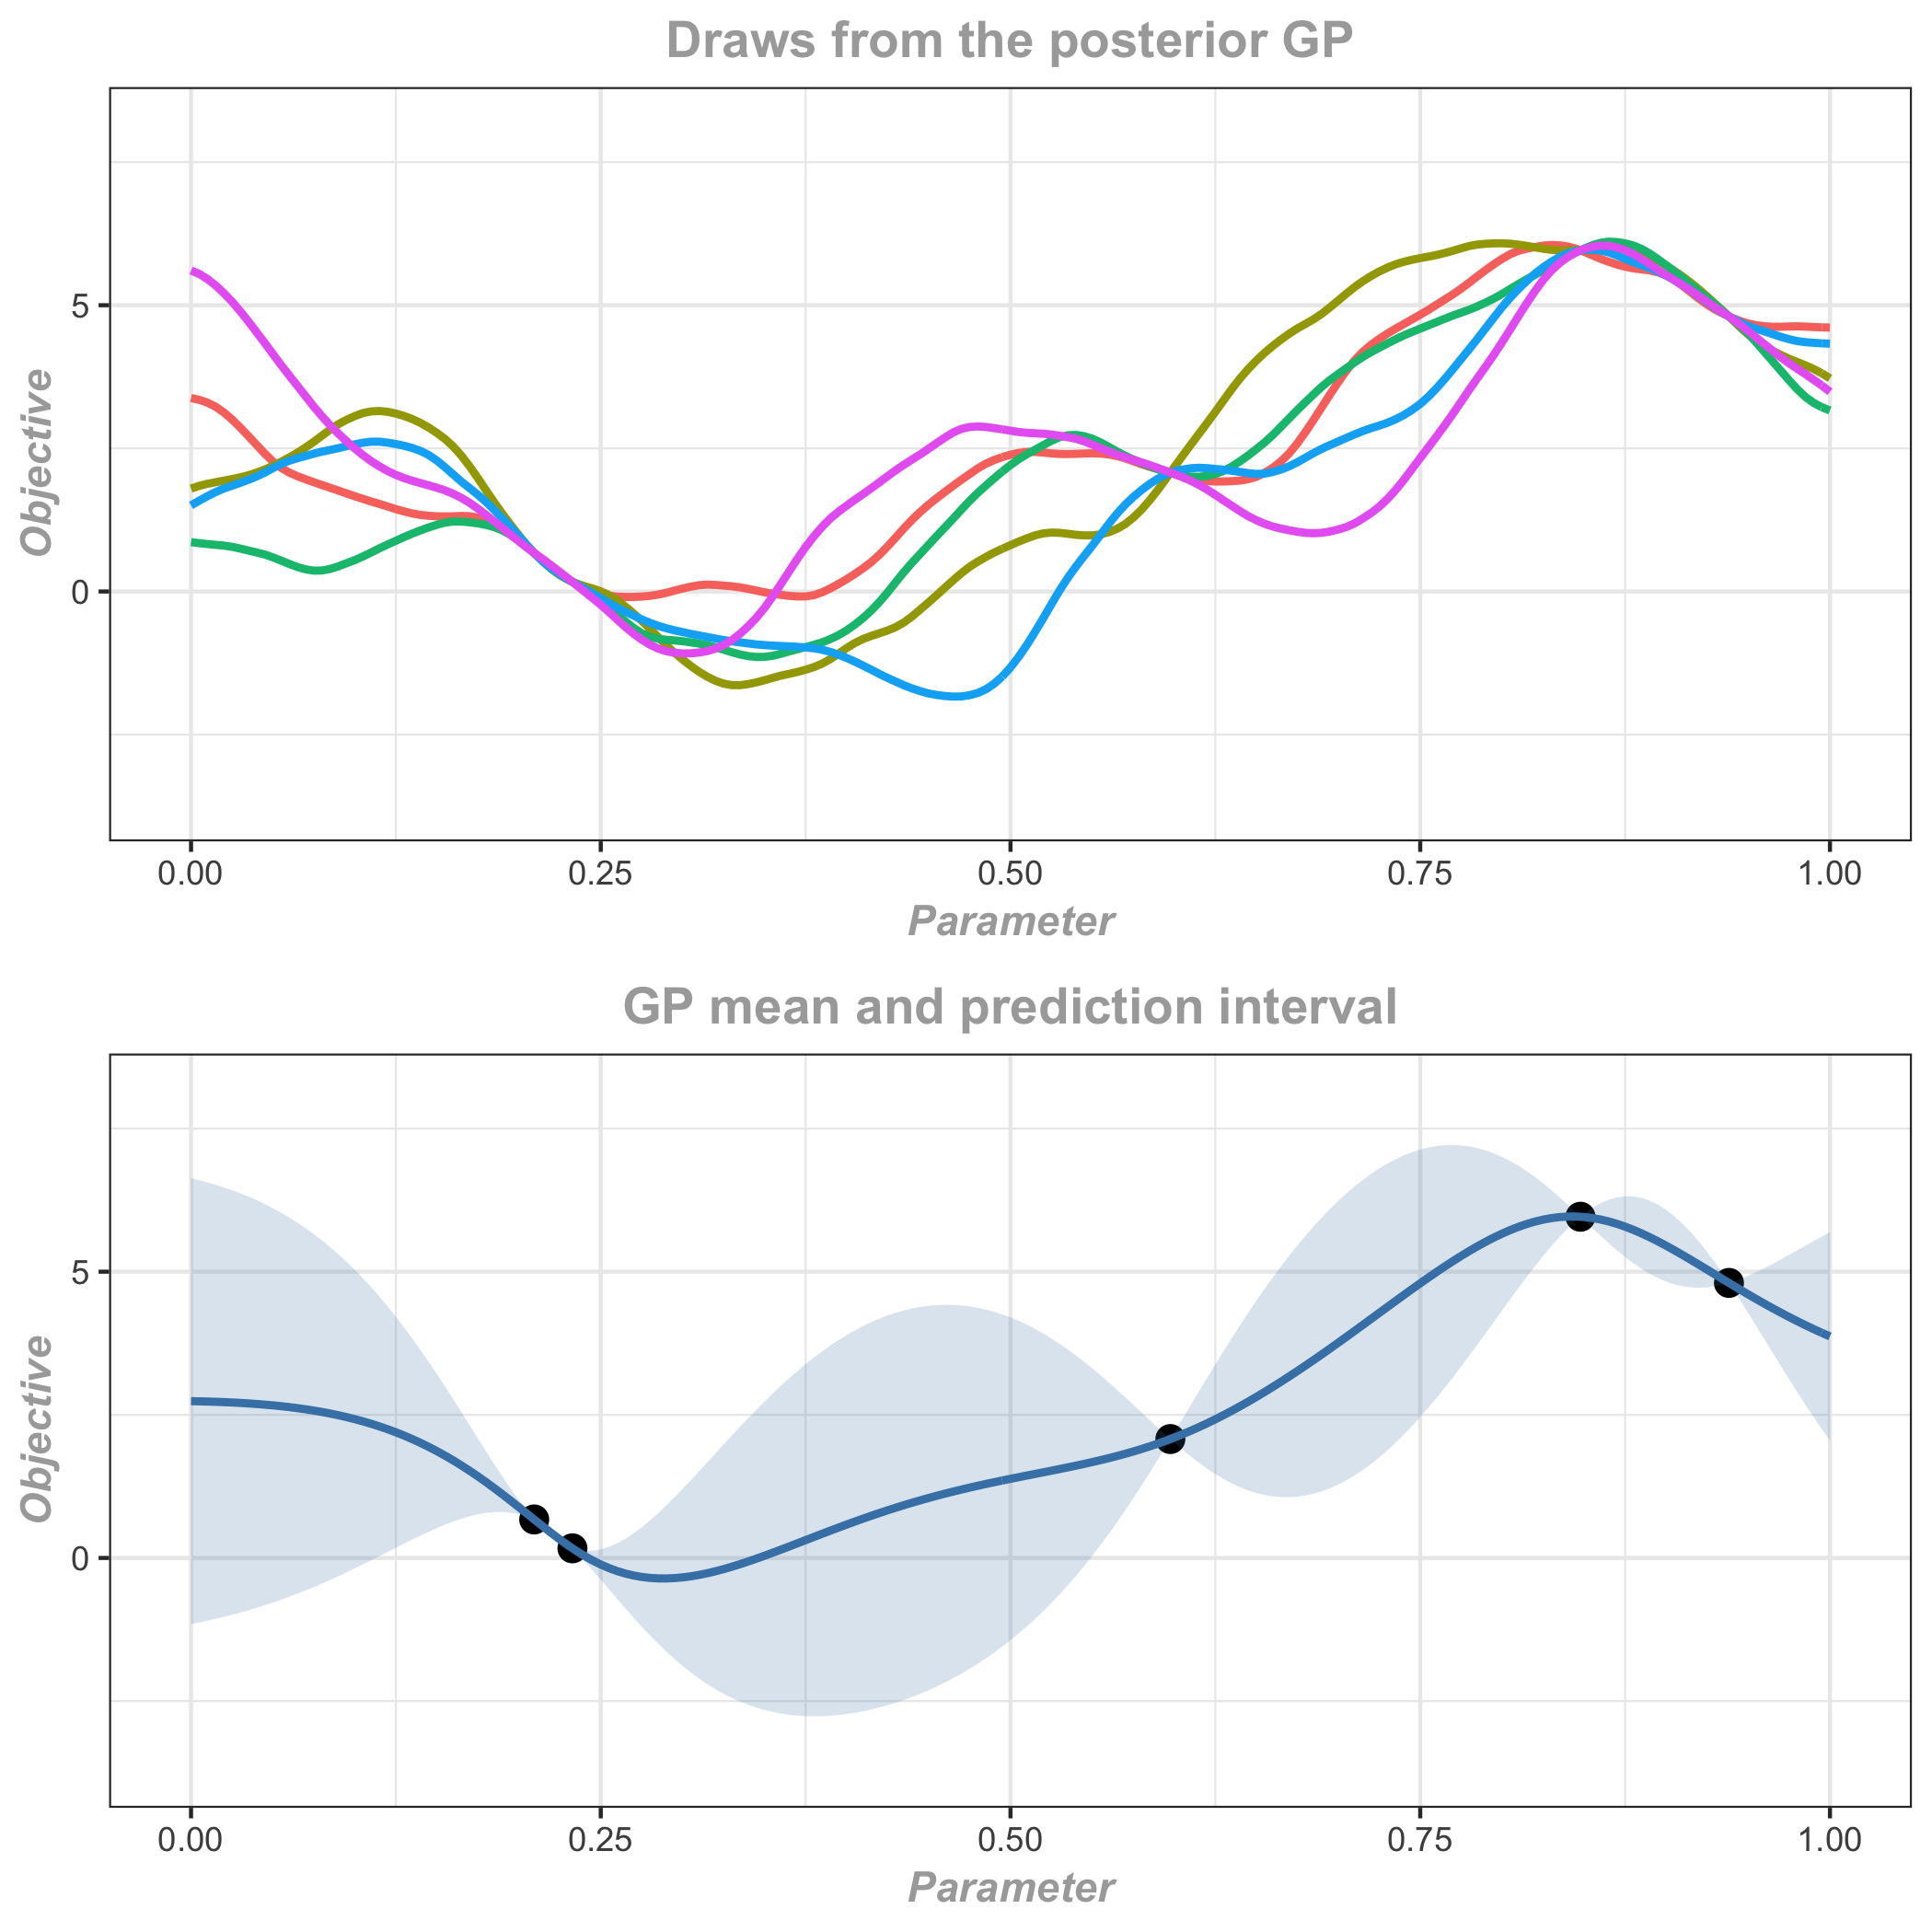 GP Posterior draws and predictive intervals